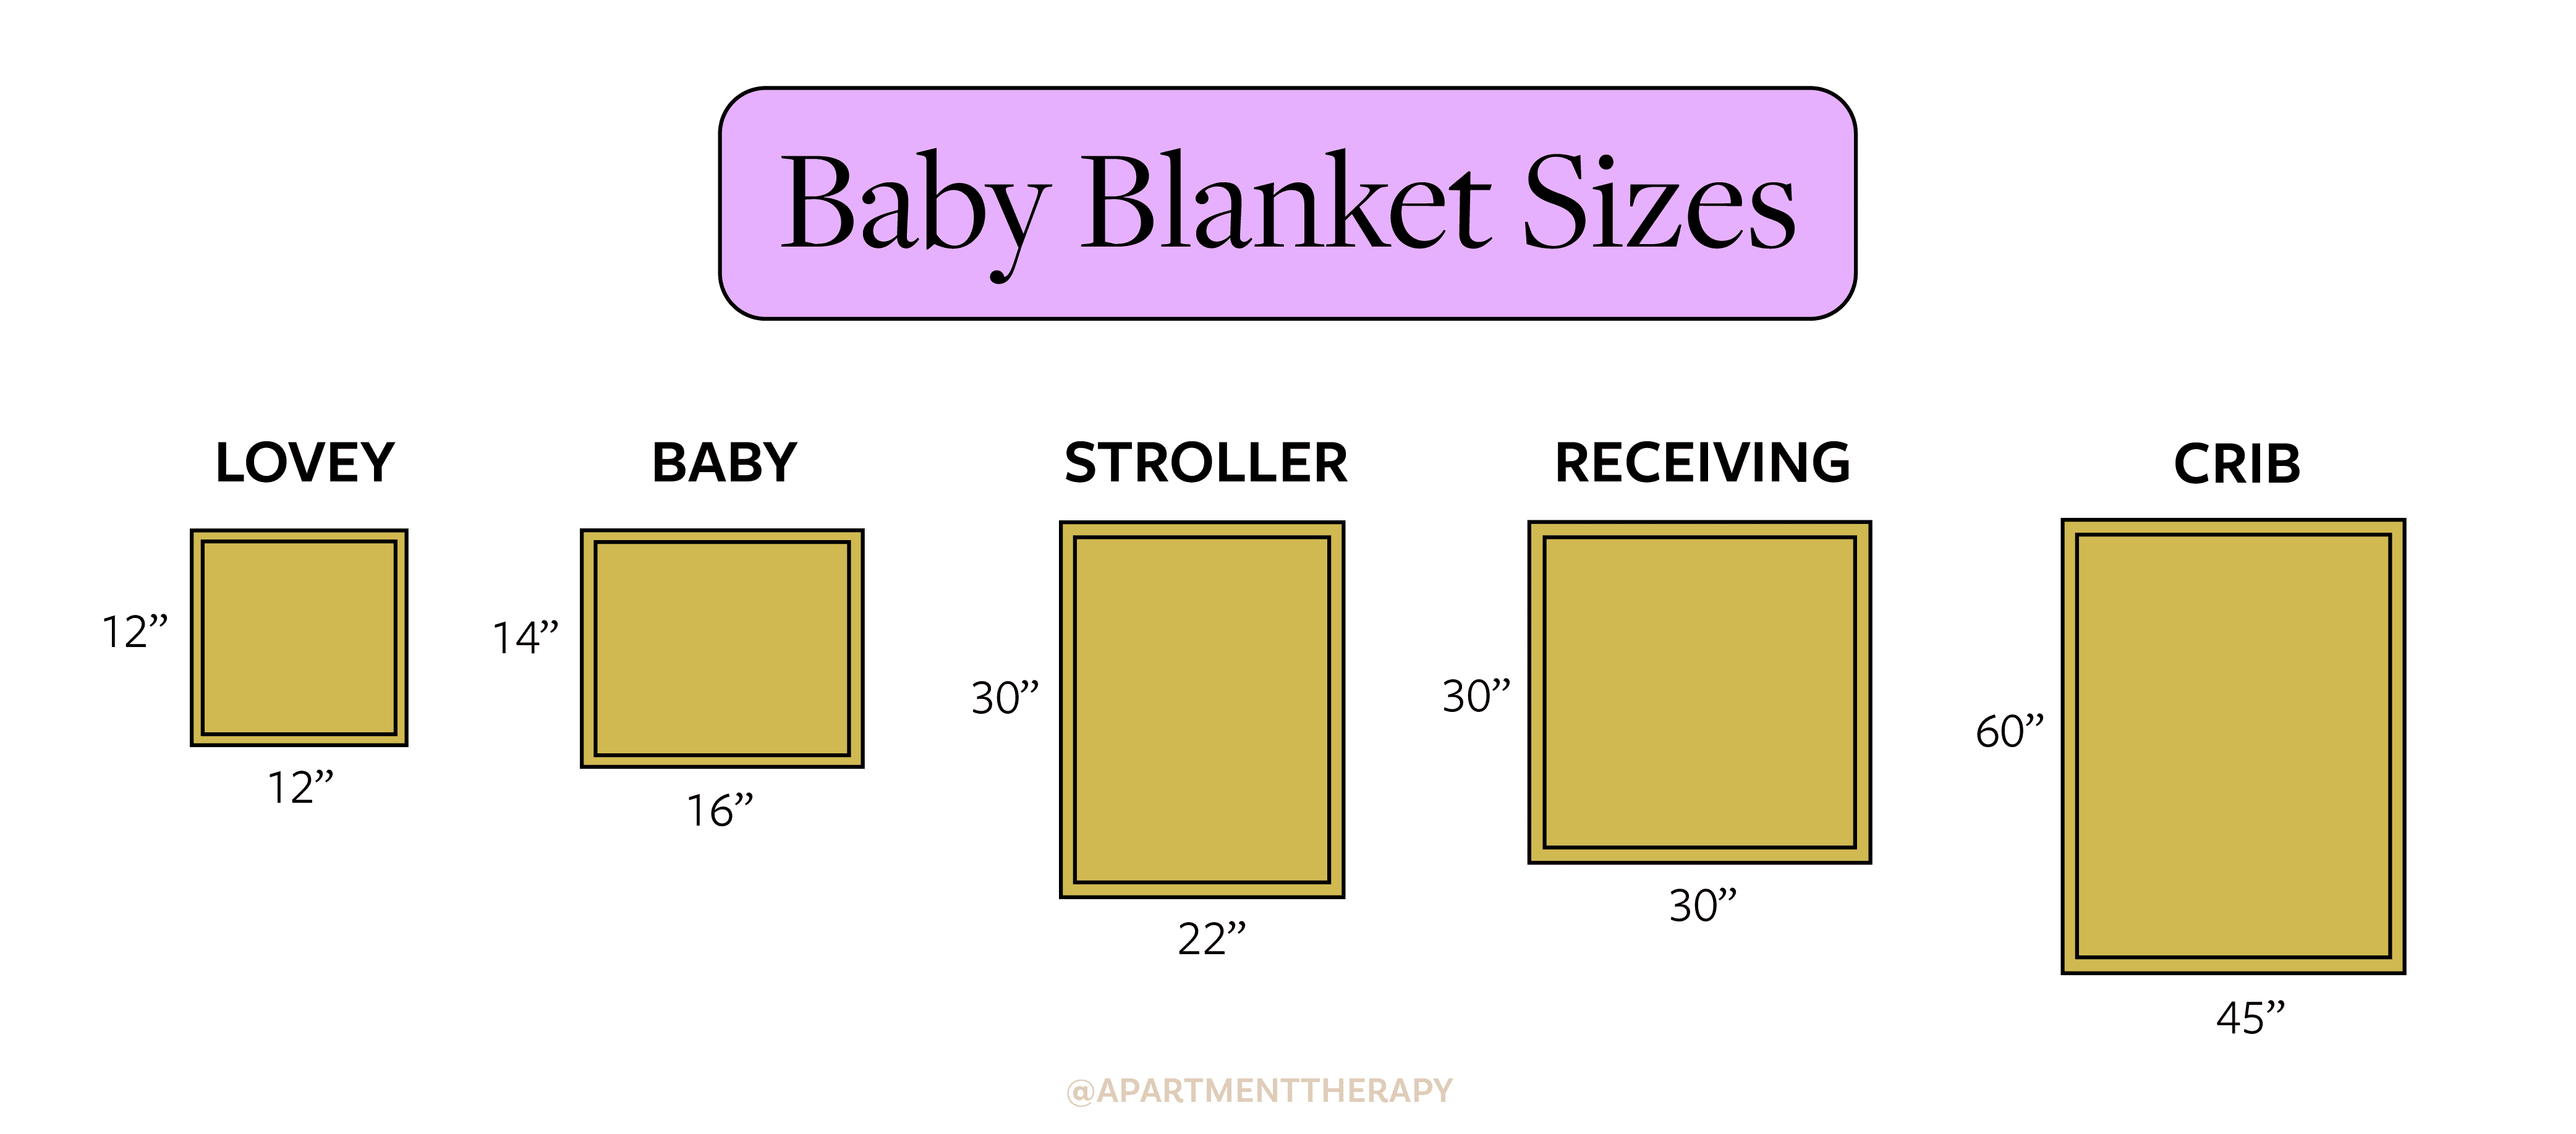 Blanket Size Upgrade